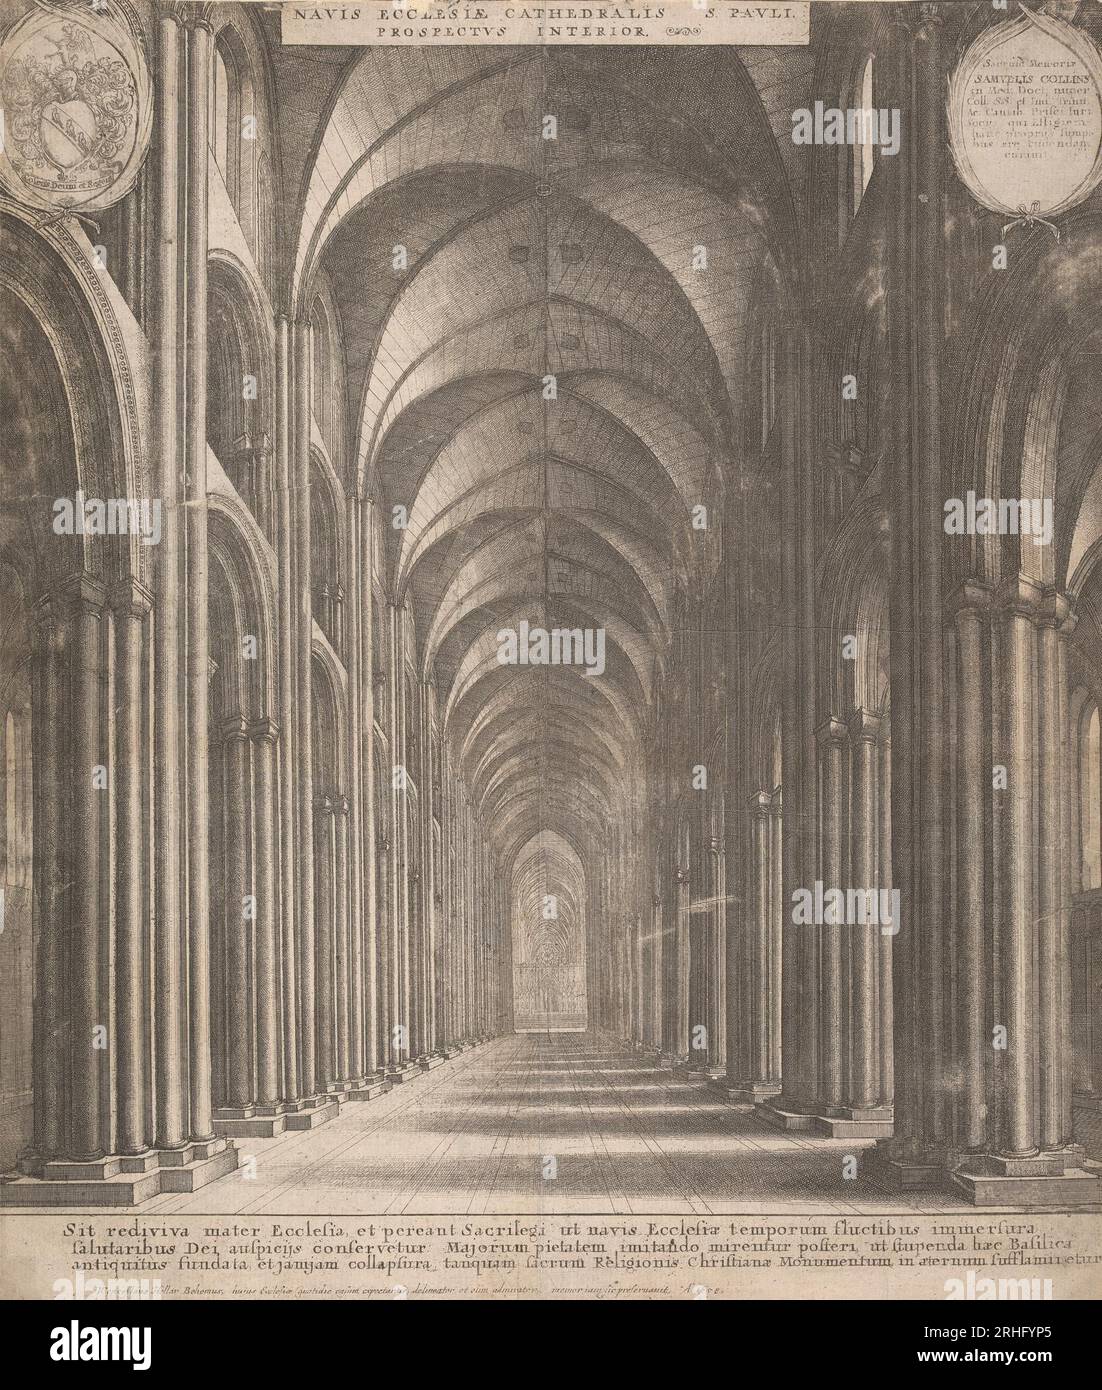 Navis Ecclesiae Cathedralis S. Pauli Propsectus Interior by Wenceslaus Hollar Stock Photo